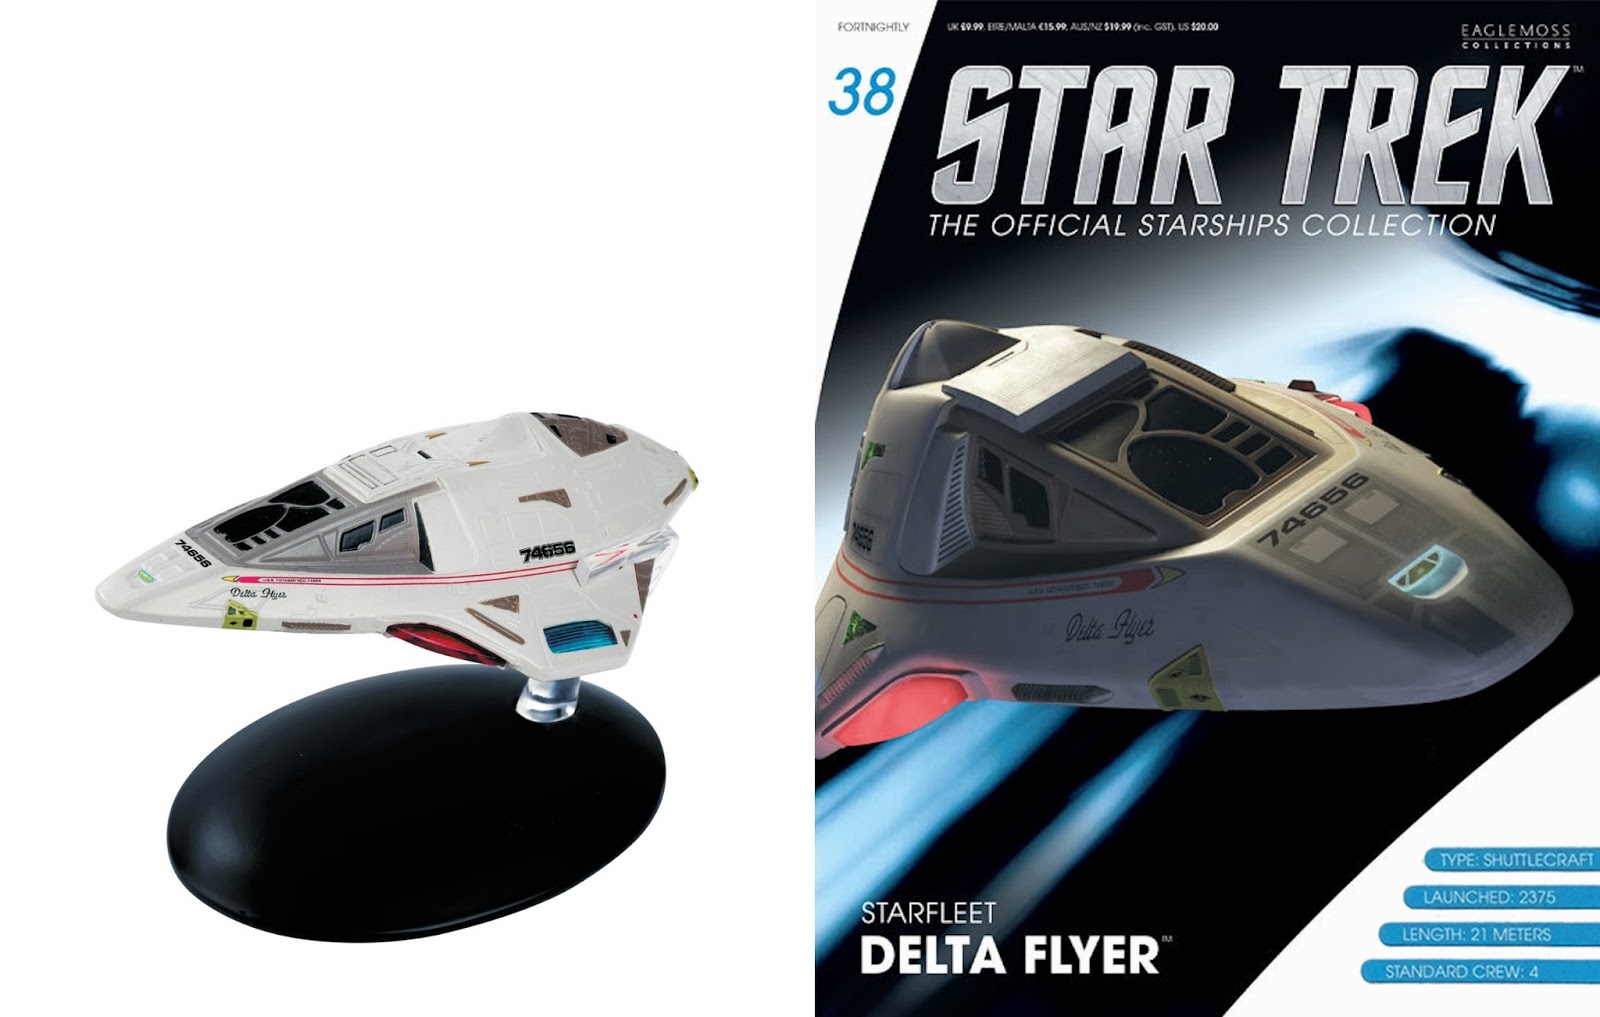 Star Trek Eaglemoss Issue 84 NX-Alpha model with Magazine 